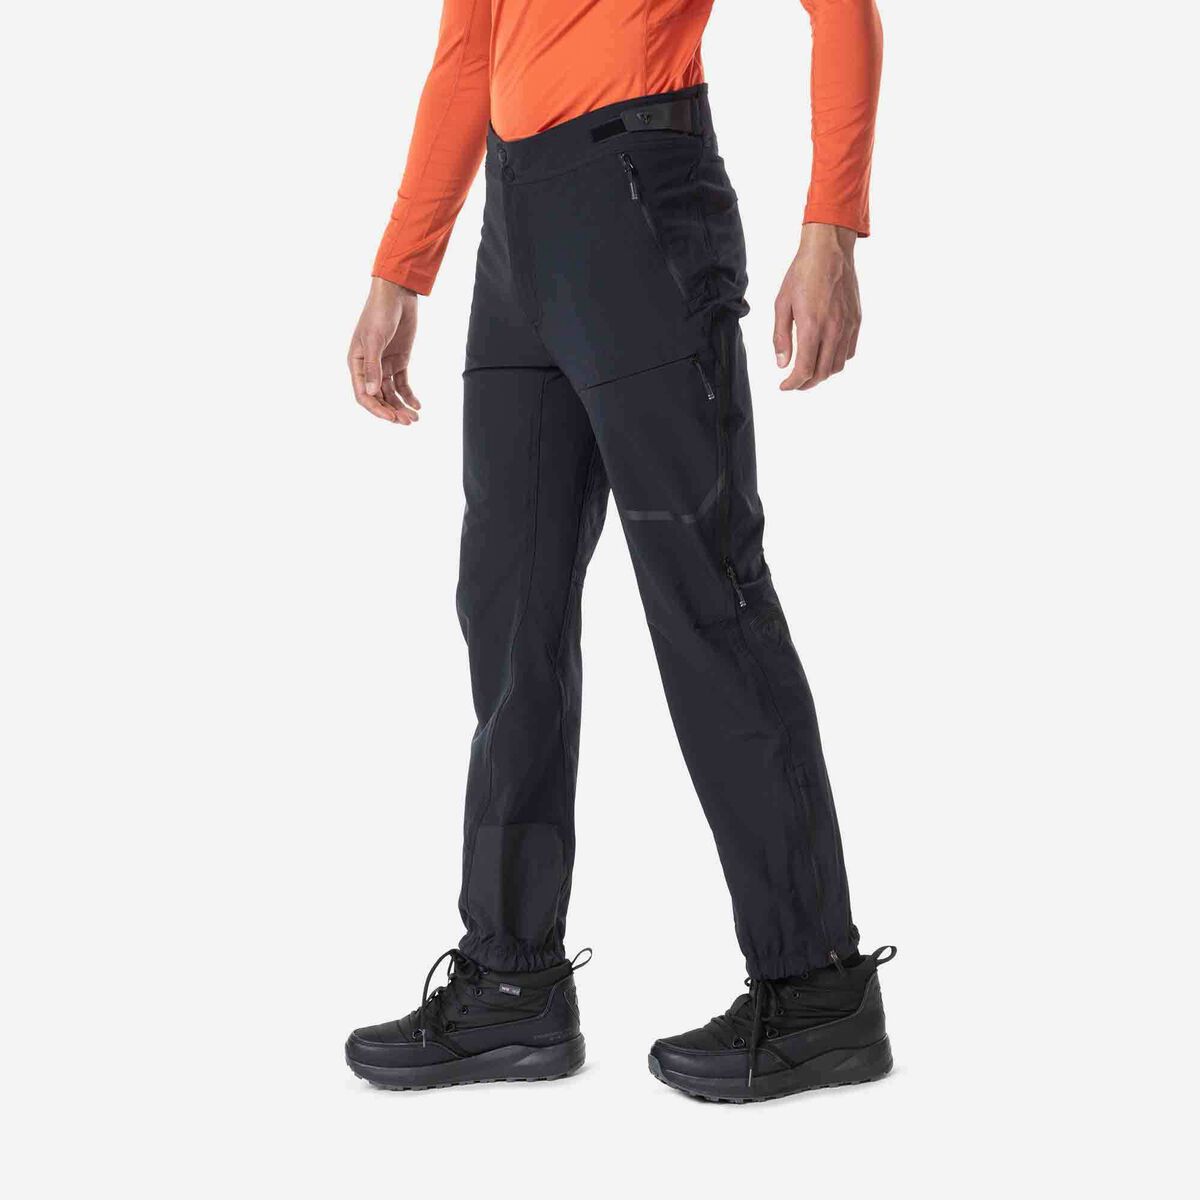 Pantalones SKPR Tech para hombre